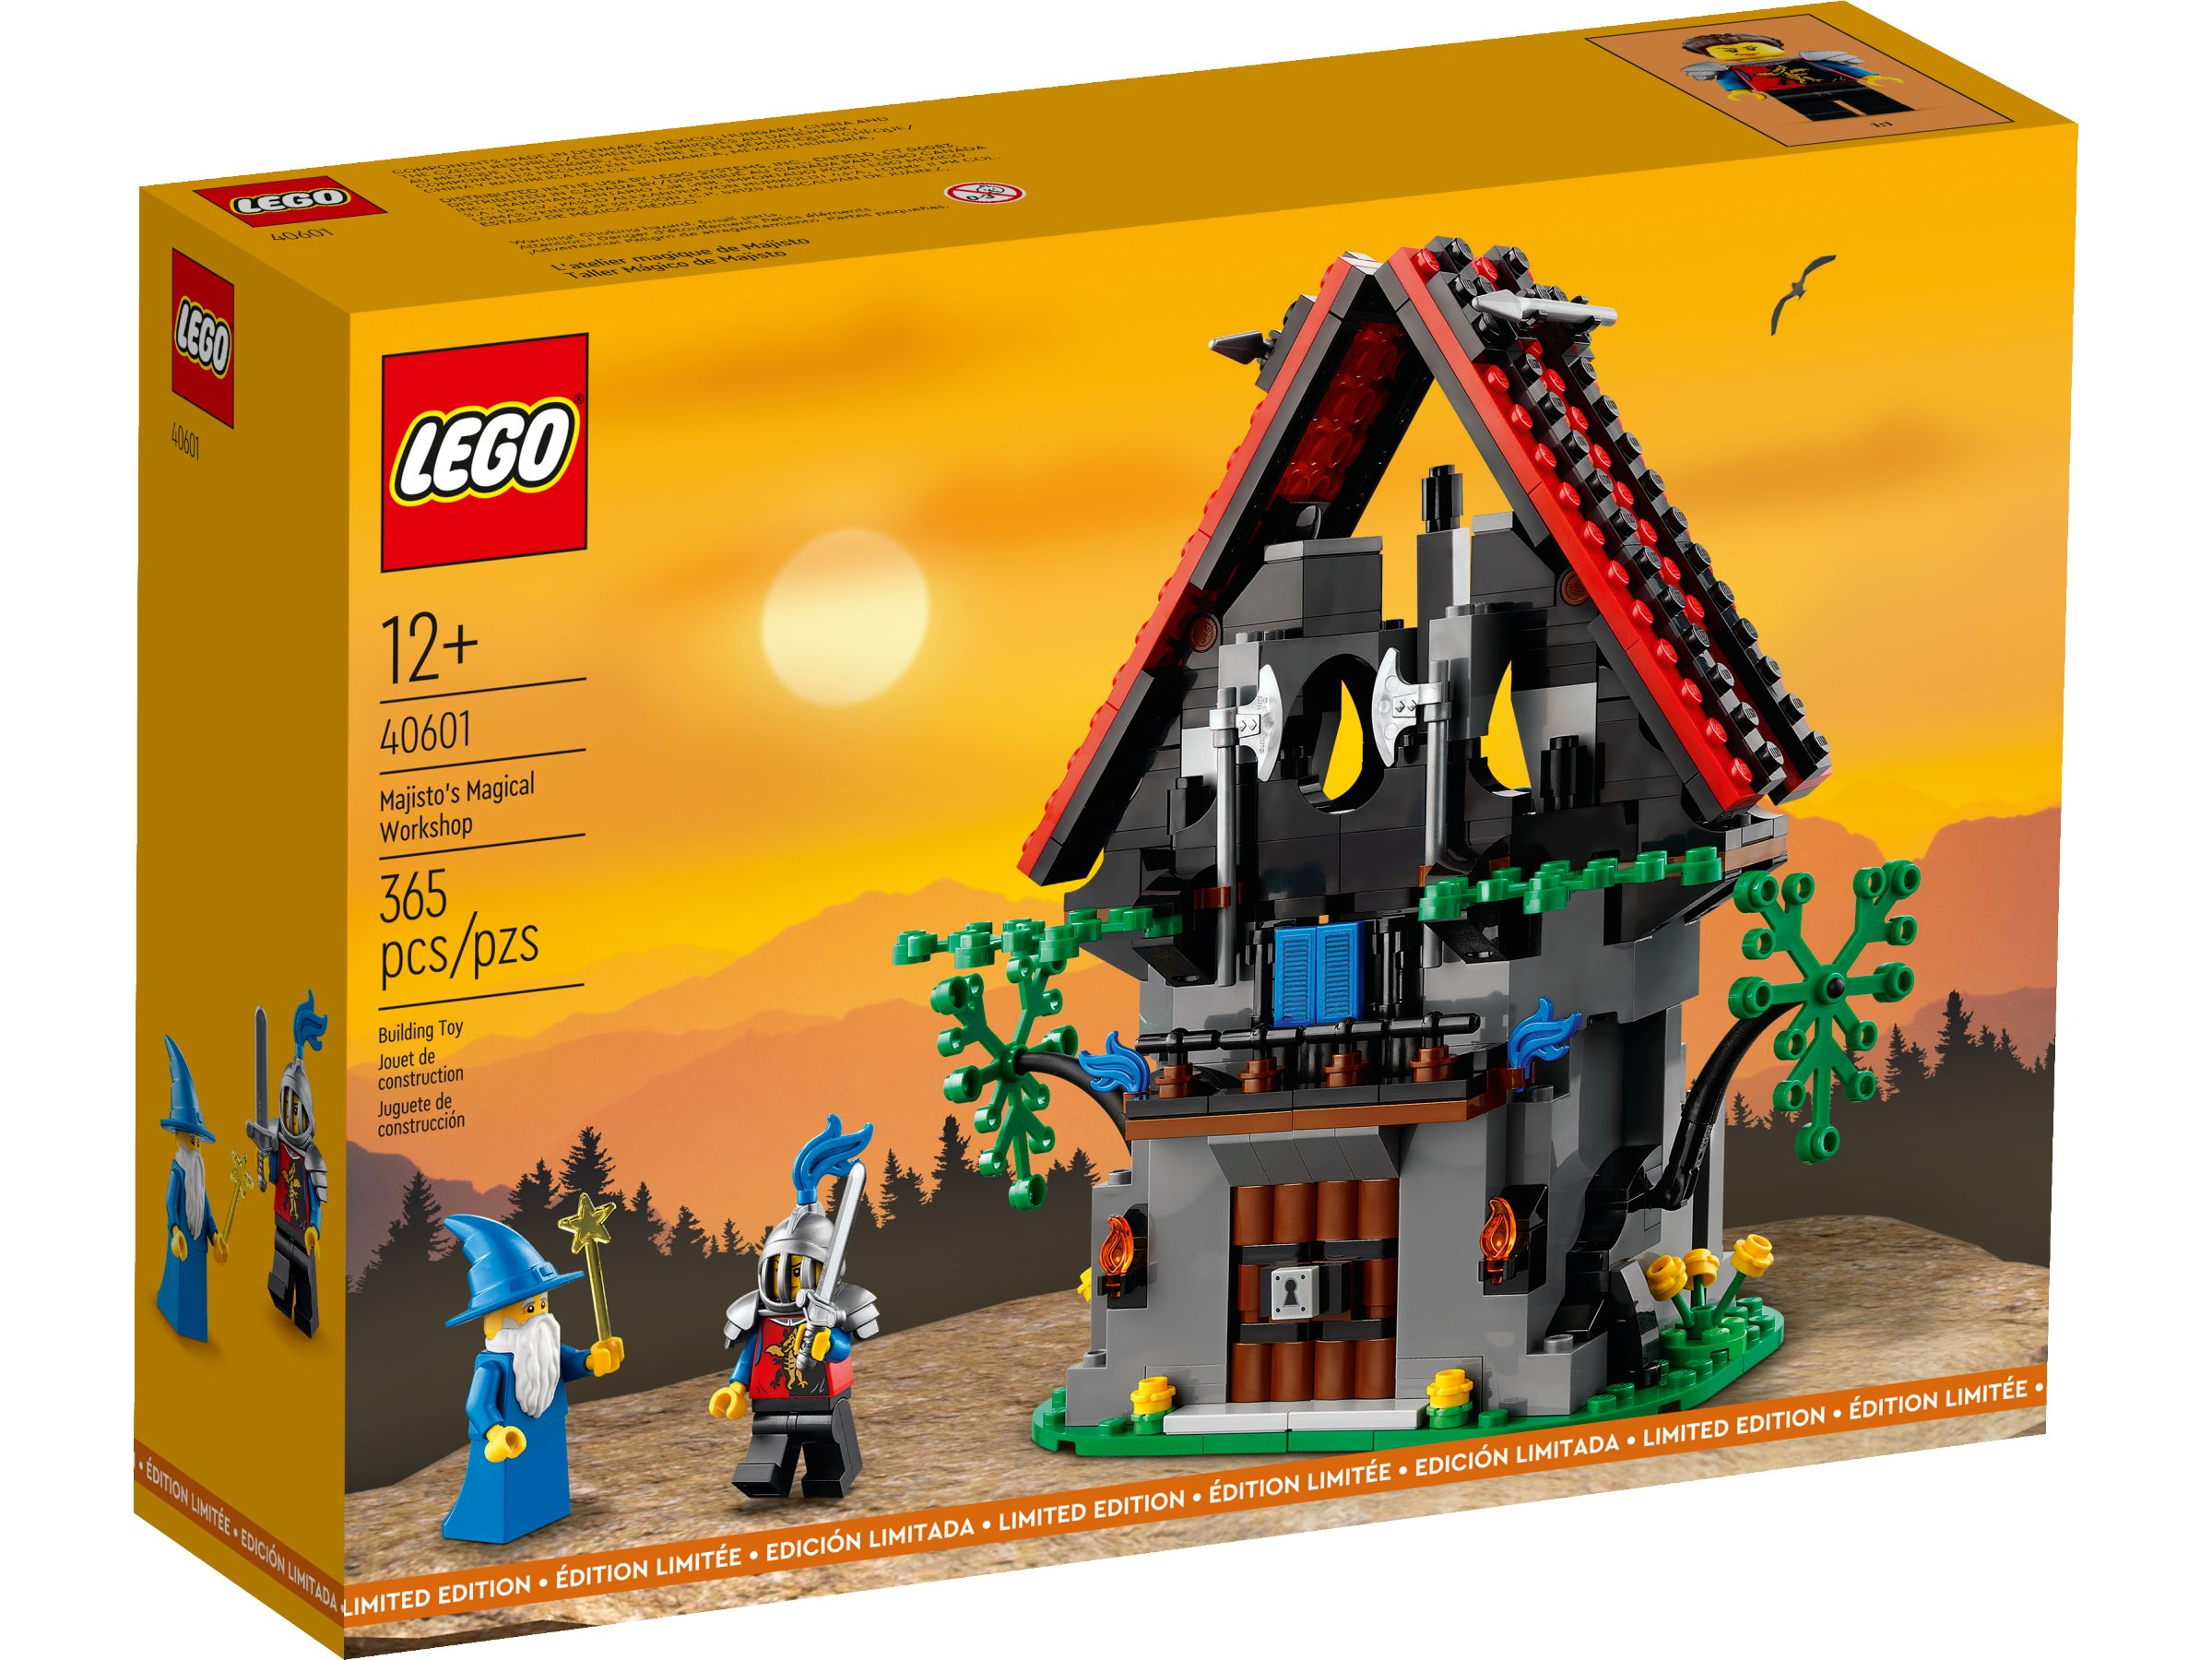 LEGO 40601 Majistos Zauberwerkstatt Bausatz